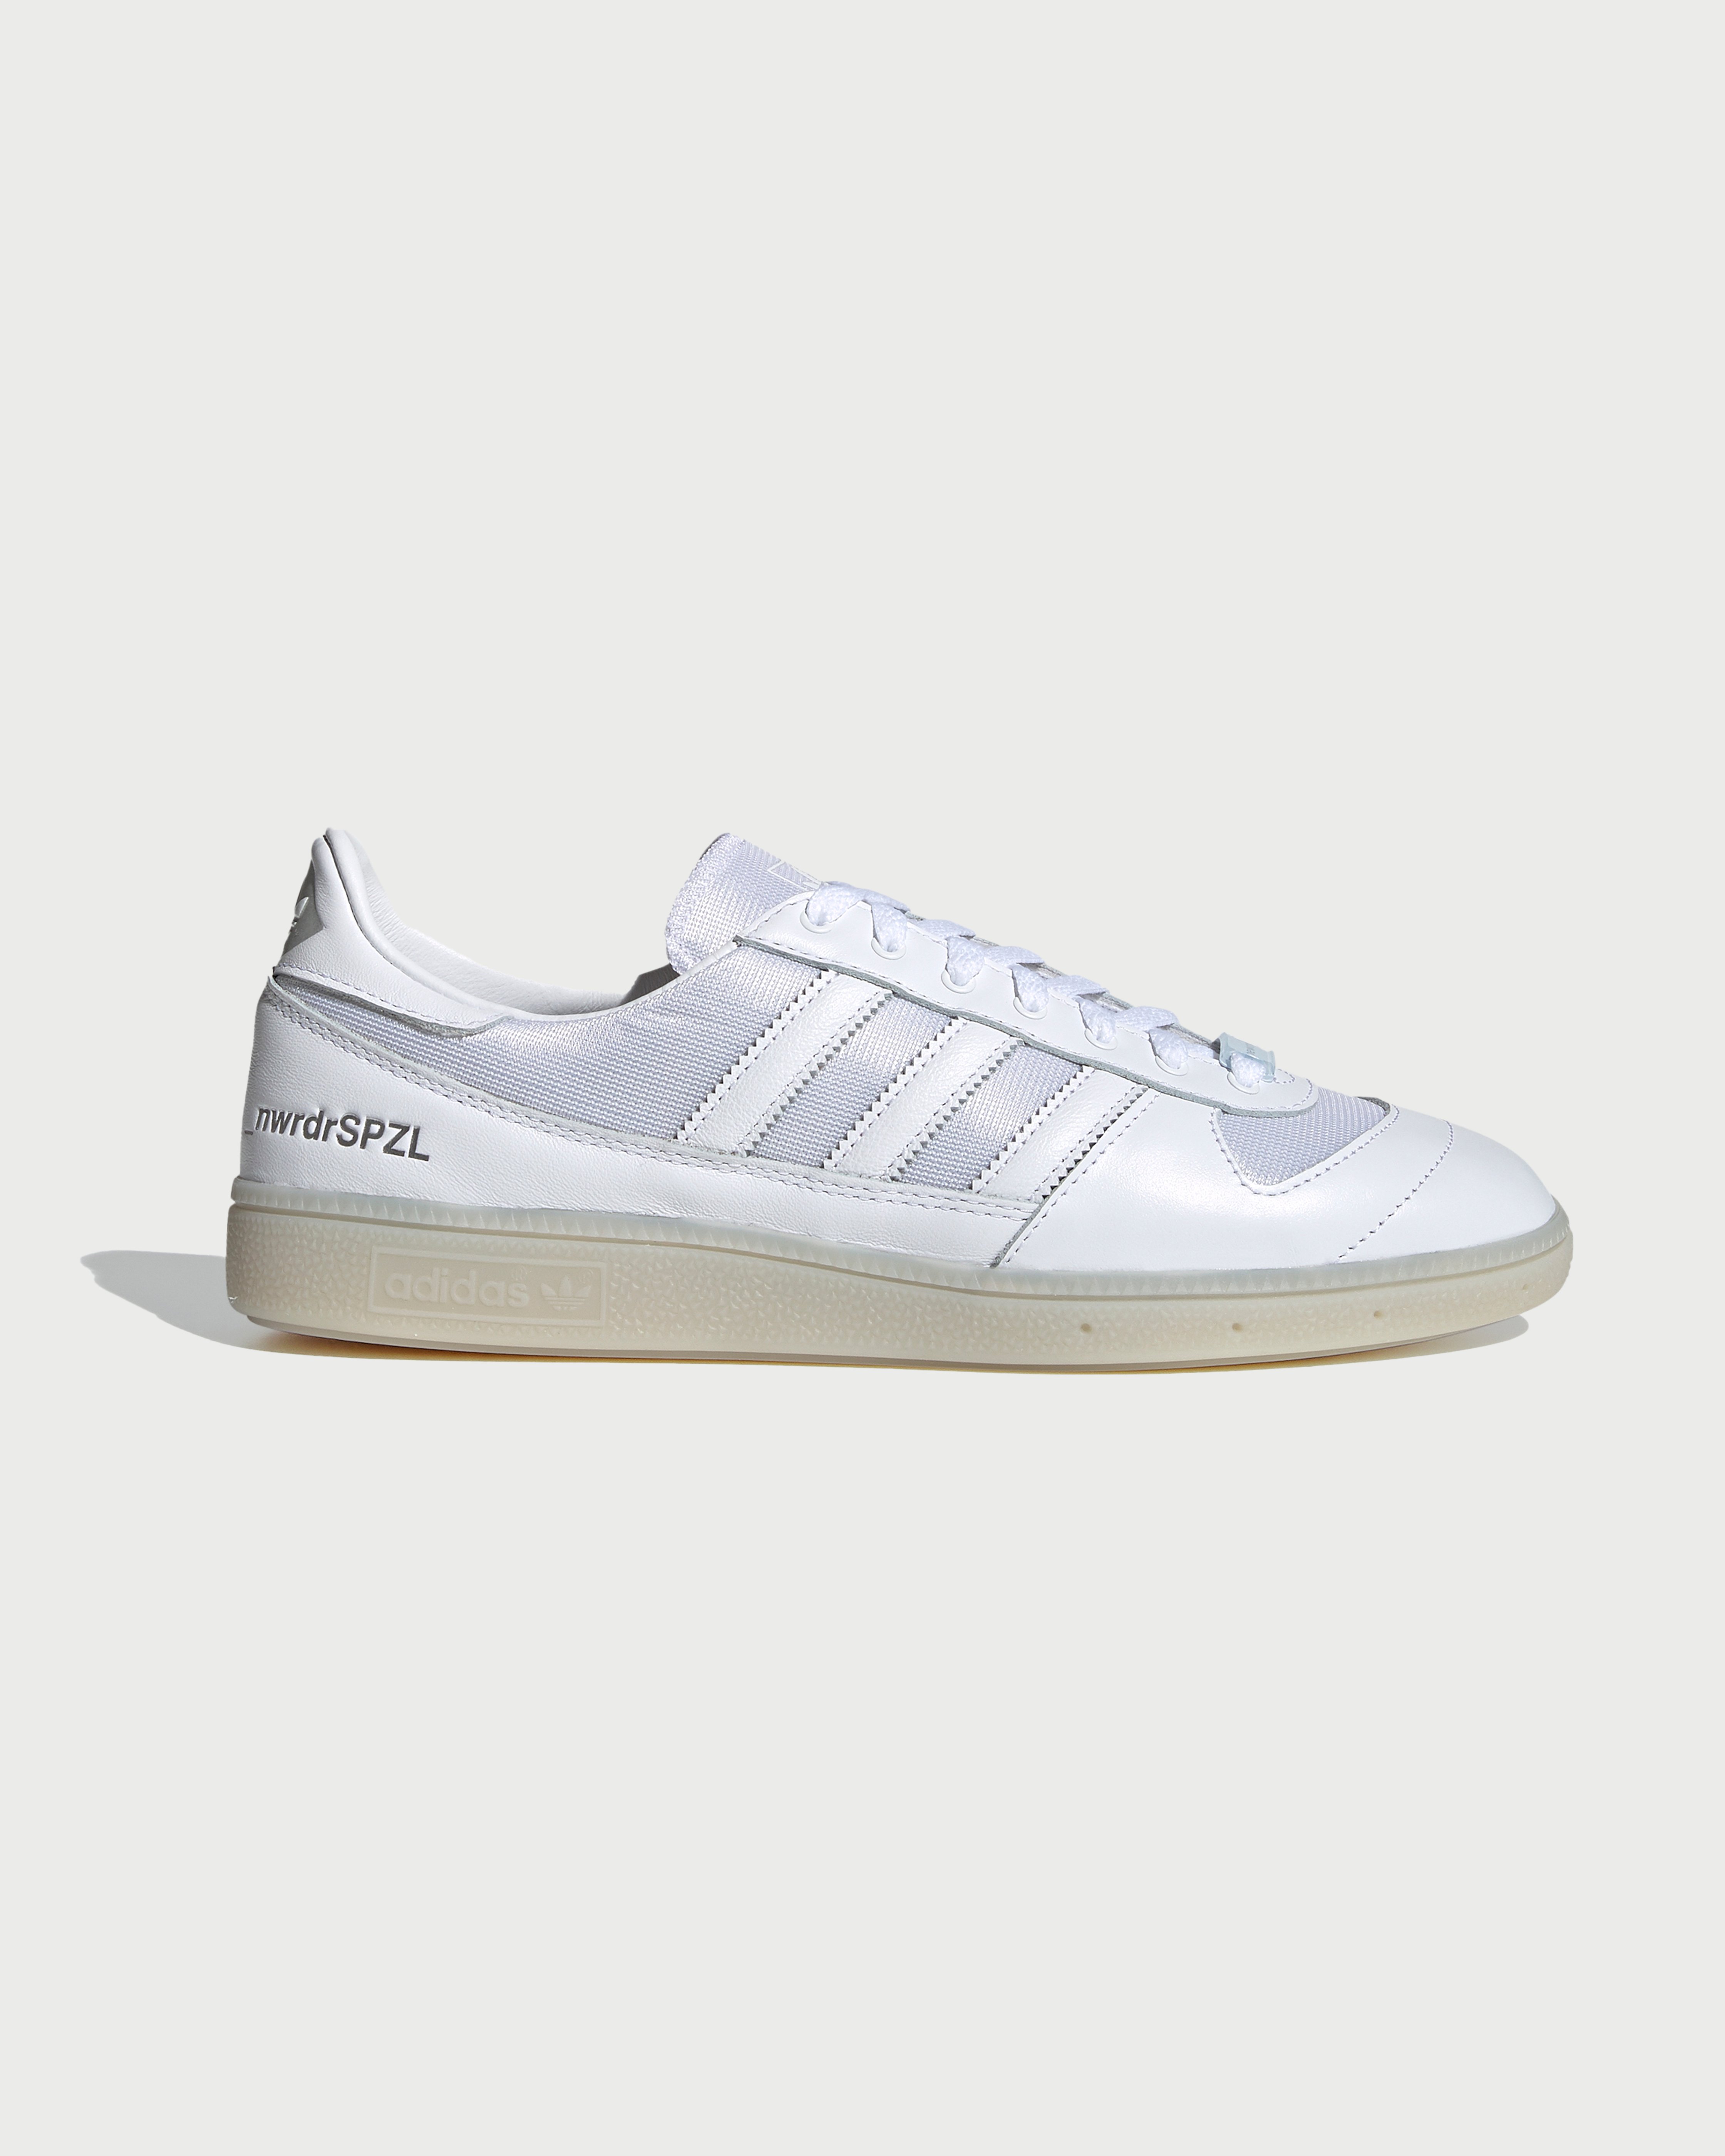 Adidas - Wilsy Spezial x New Order White - Footwear - White - Image 1